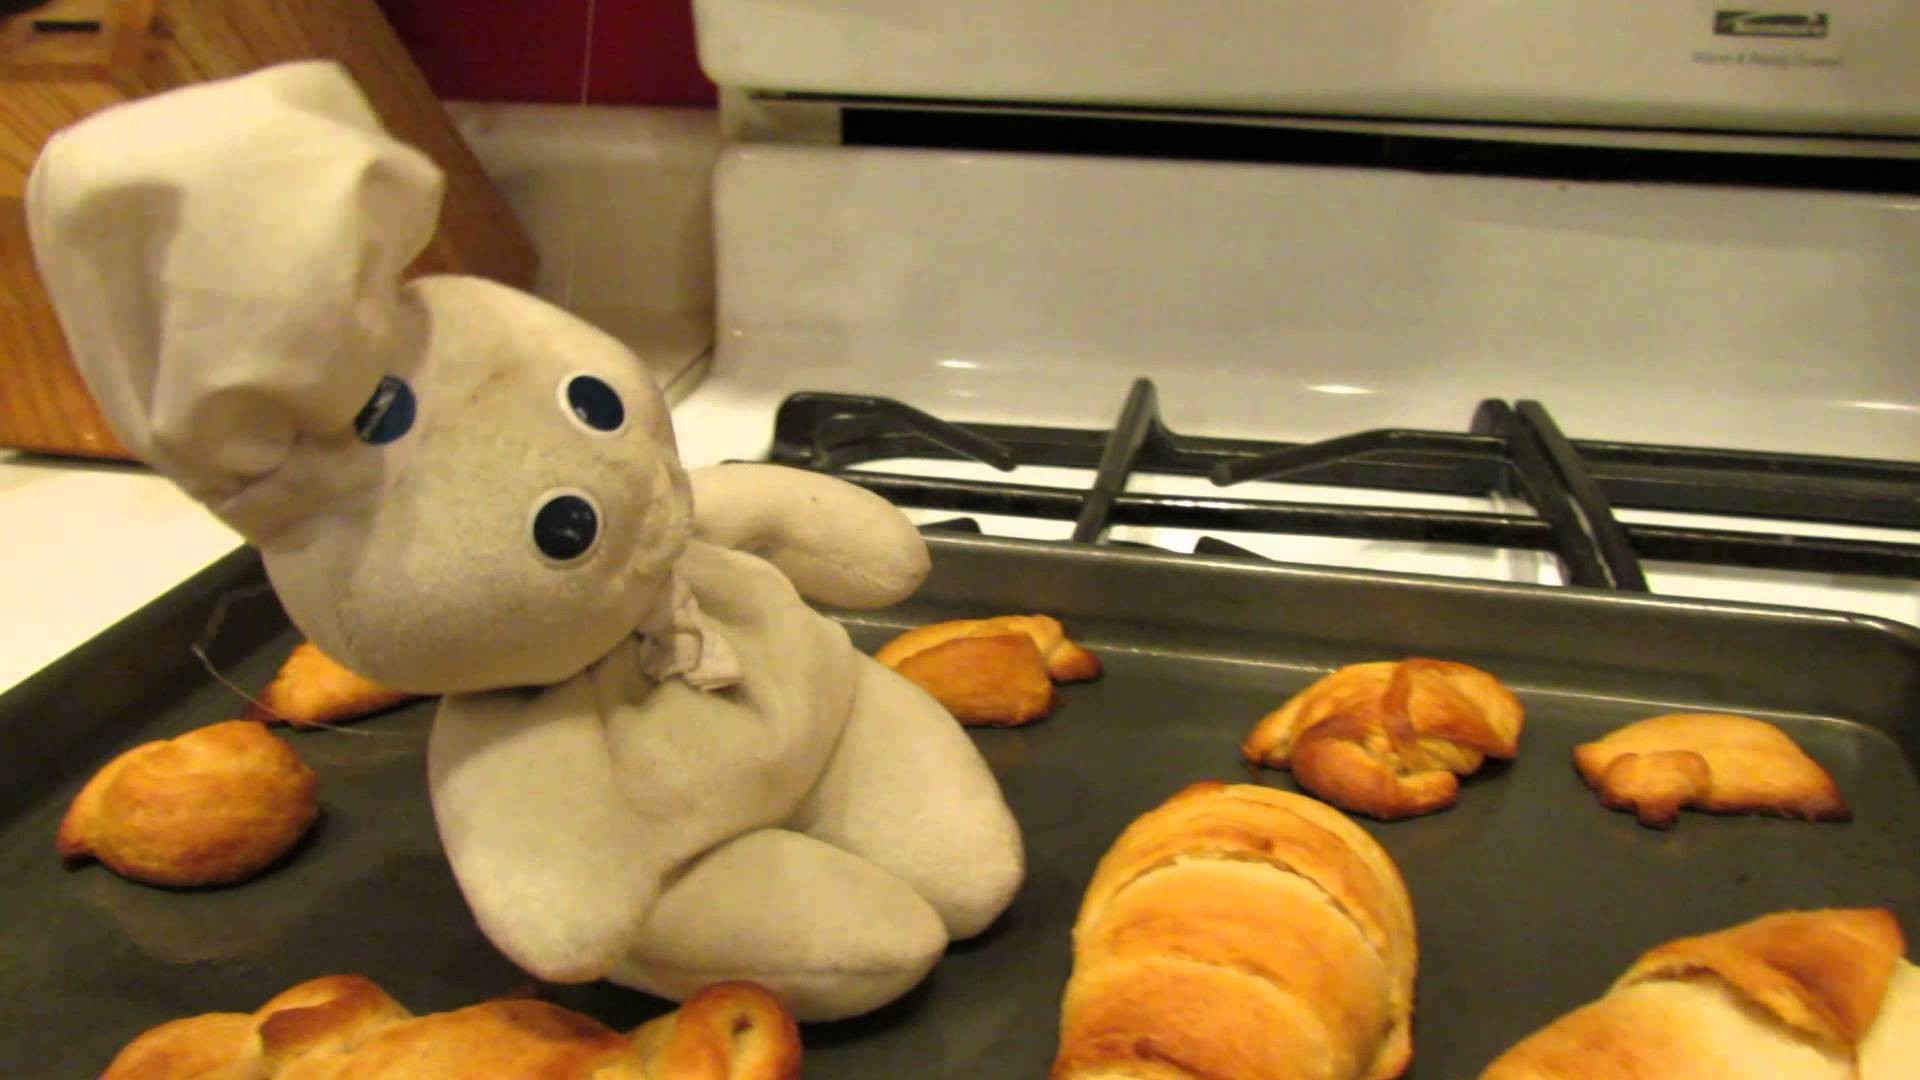 1920x1080 Pillsbury Doughboy Loves Baking Cresent Rolls! NOM NOM NOM!